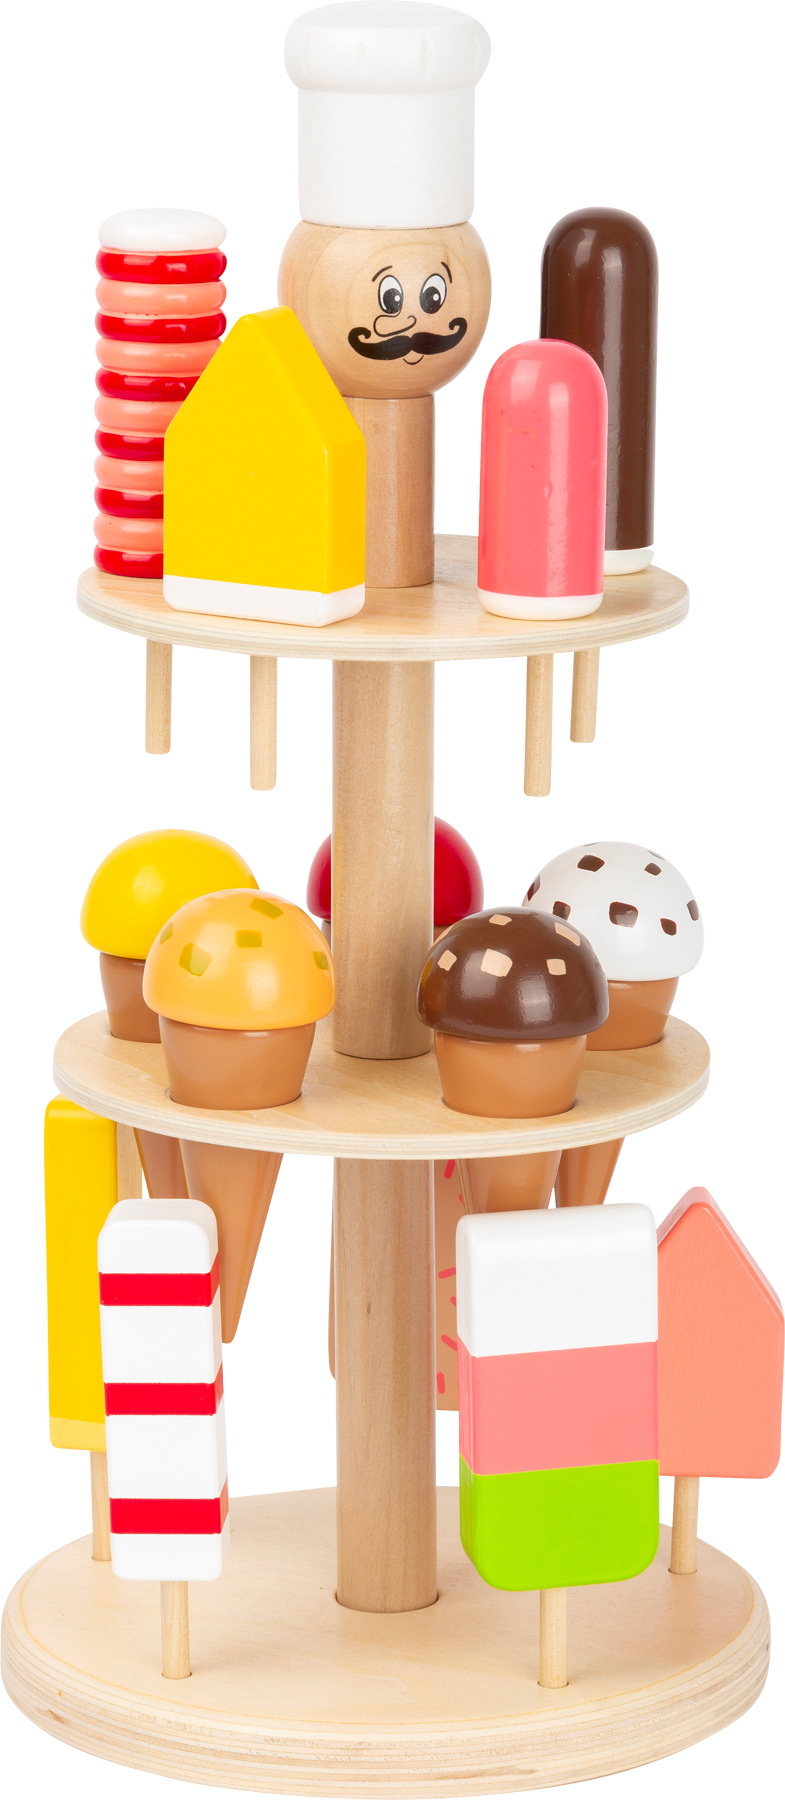 Brot-Magnet-Set 15 Teile Holz Kaufladenzubehör Kinderküche Puppenkinder 